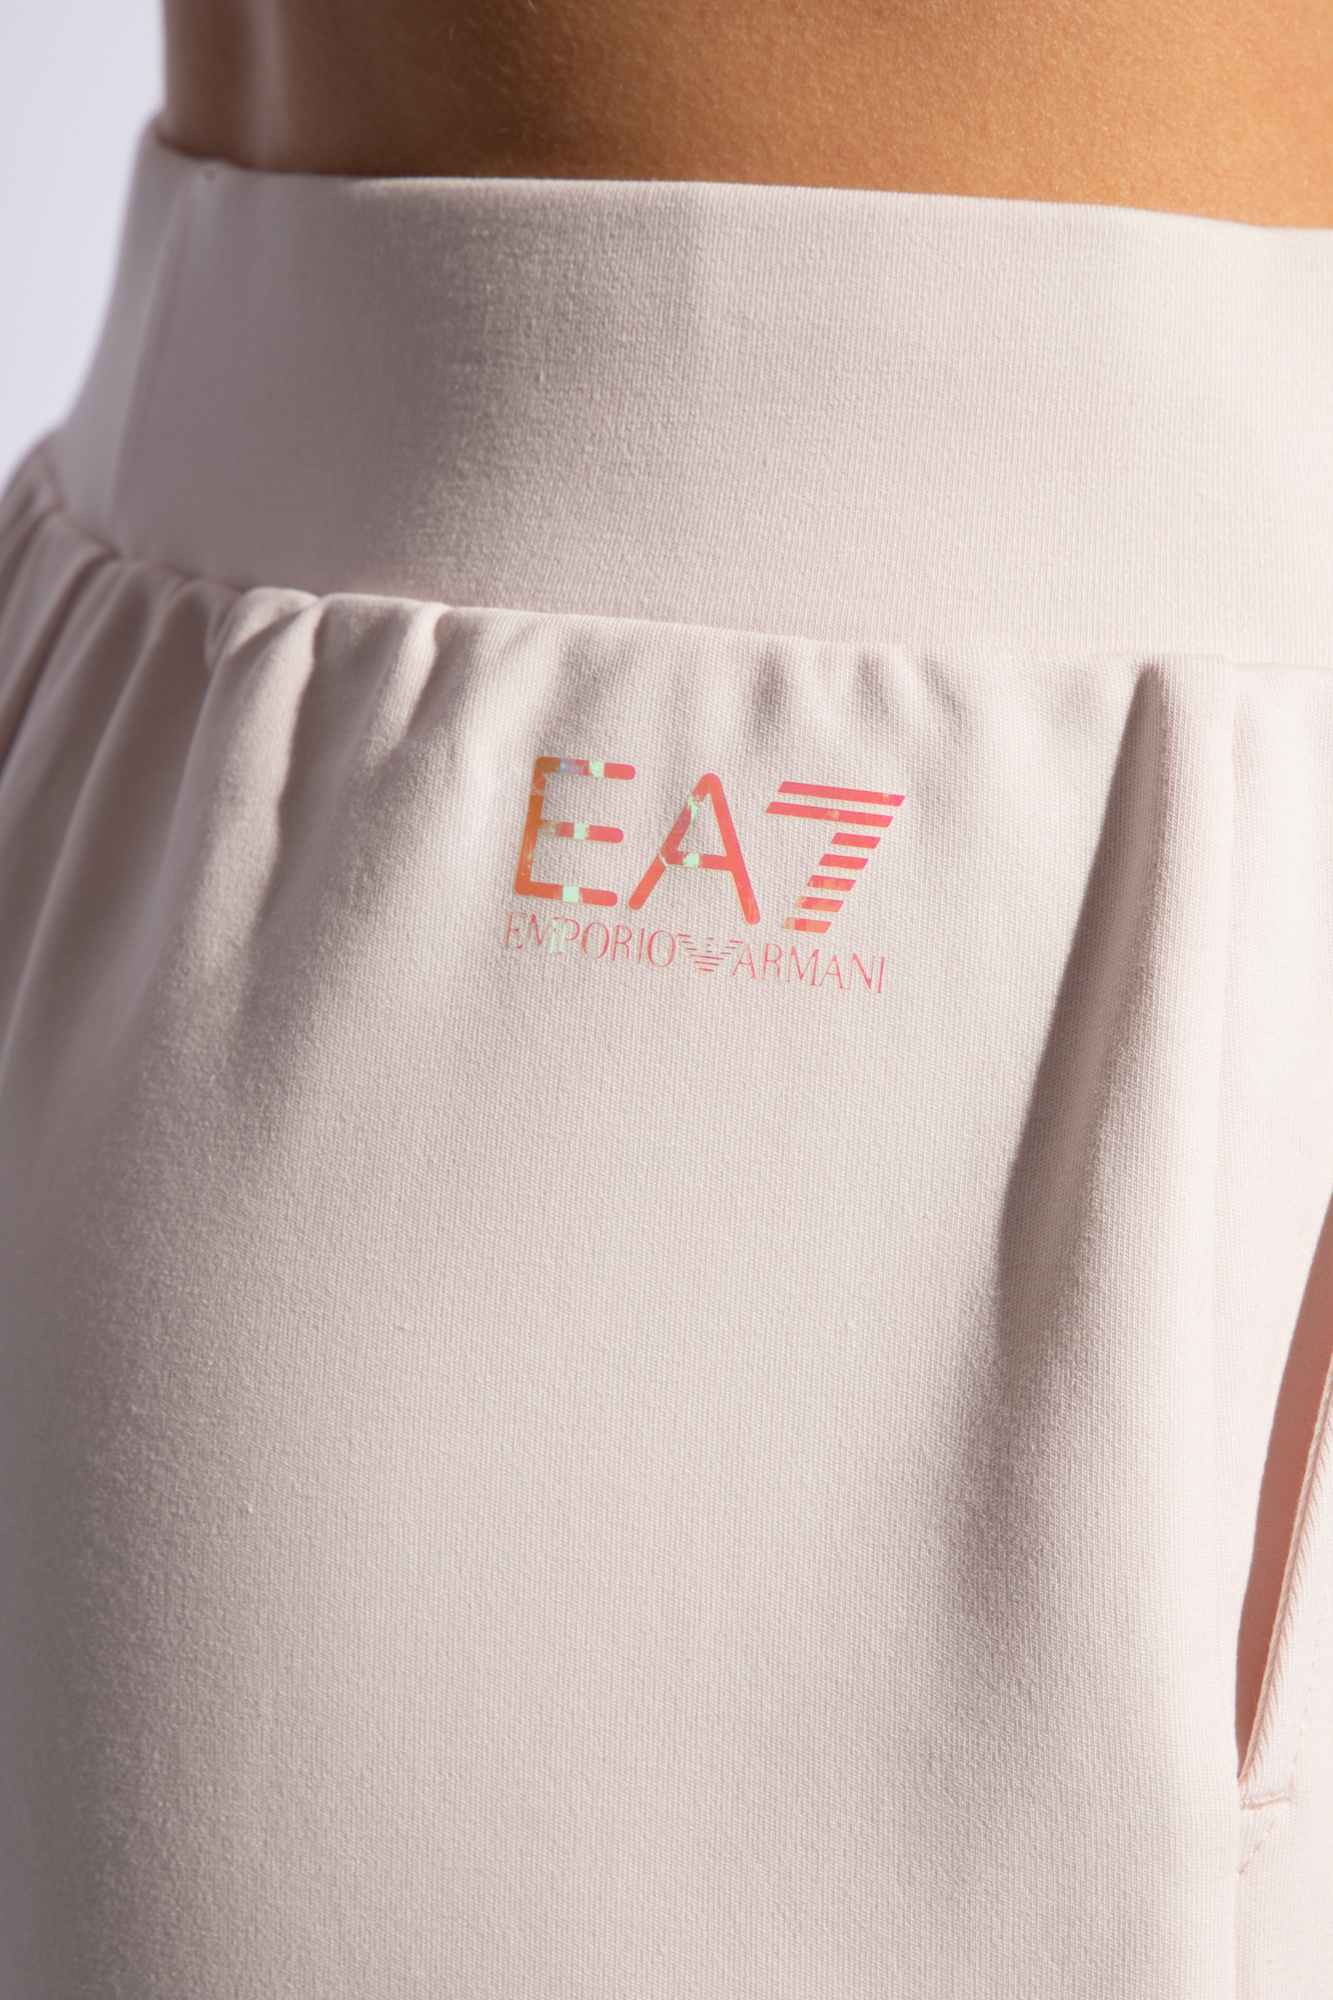 Pink Оригинальный тренч armani junior trench coat EA7 Emporio Armani -  Emporio Armani ruffle trim jacket - Domaine-pignadaShops Switzerland